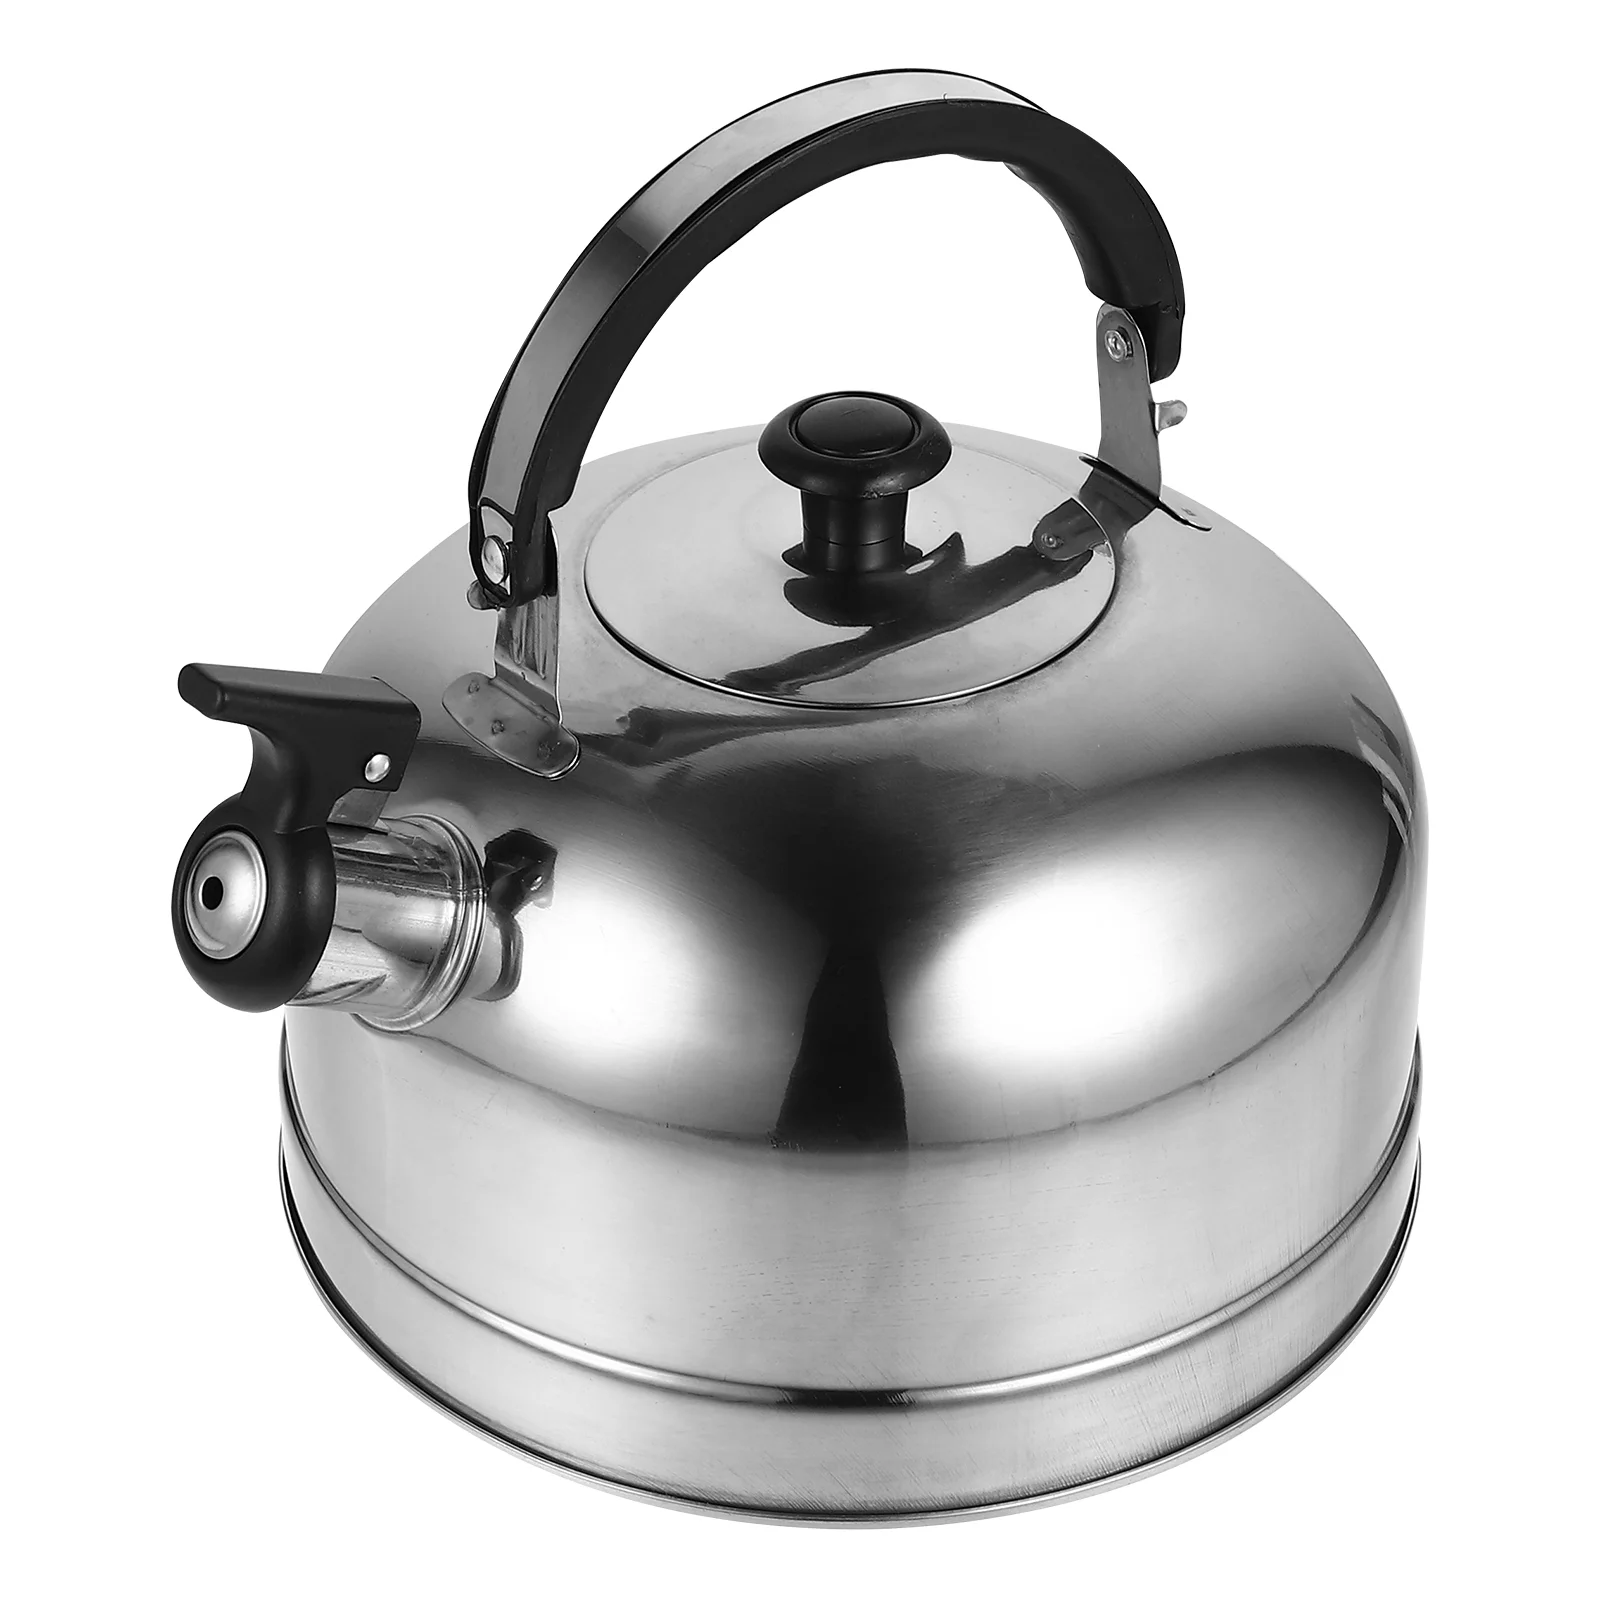 https://ae01.alicdn.com/kf/Sb186d66022e84965b325e3f4e64a8ca8S/Boiler-Sound-Pot-Make-Tea-Stainless-Steel-Teapot-Whistling-Coffee-Plastic-Heating-Teakettle-Gas-Stove-Home.jpg